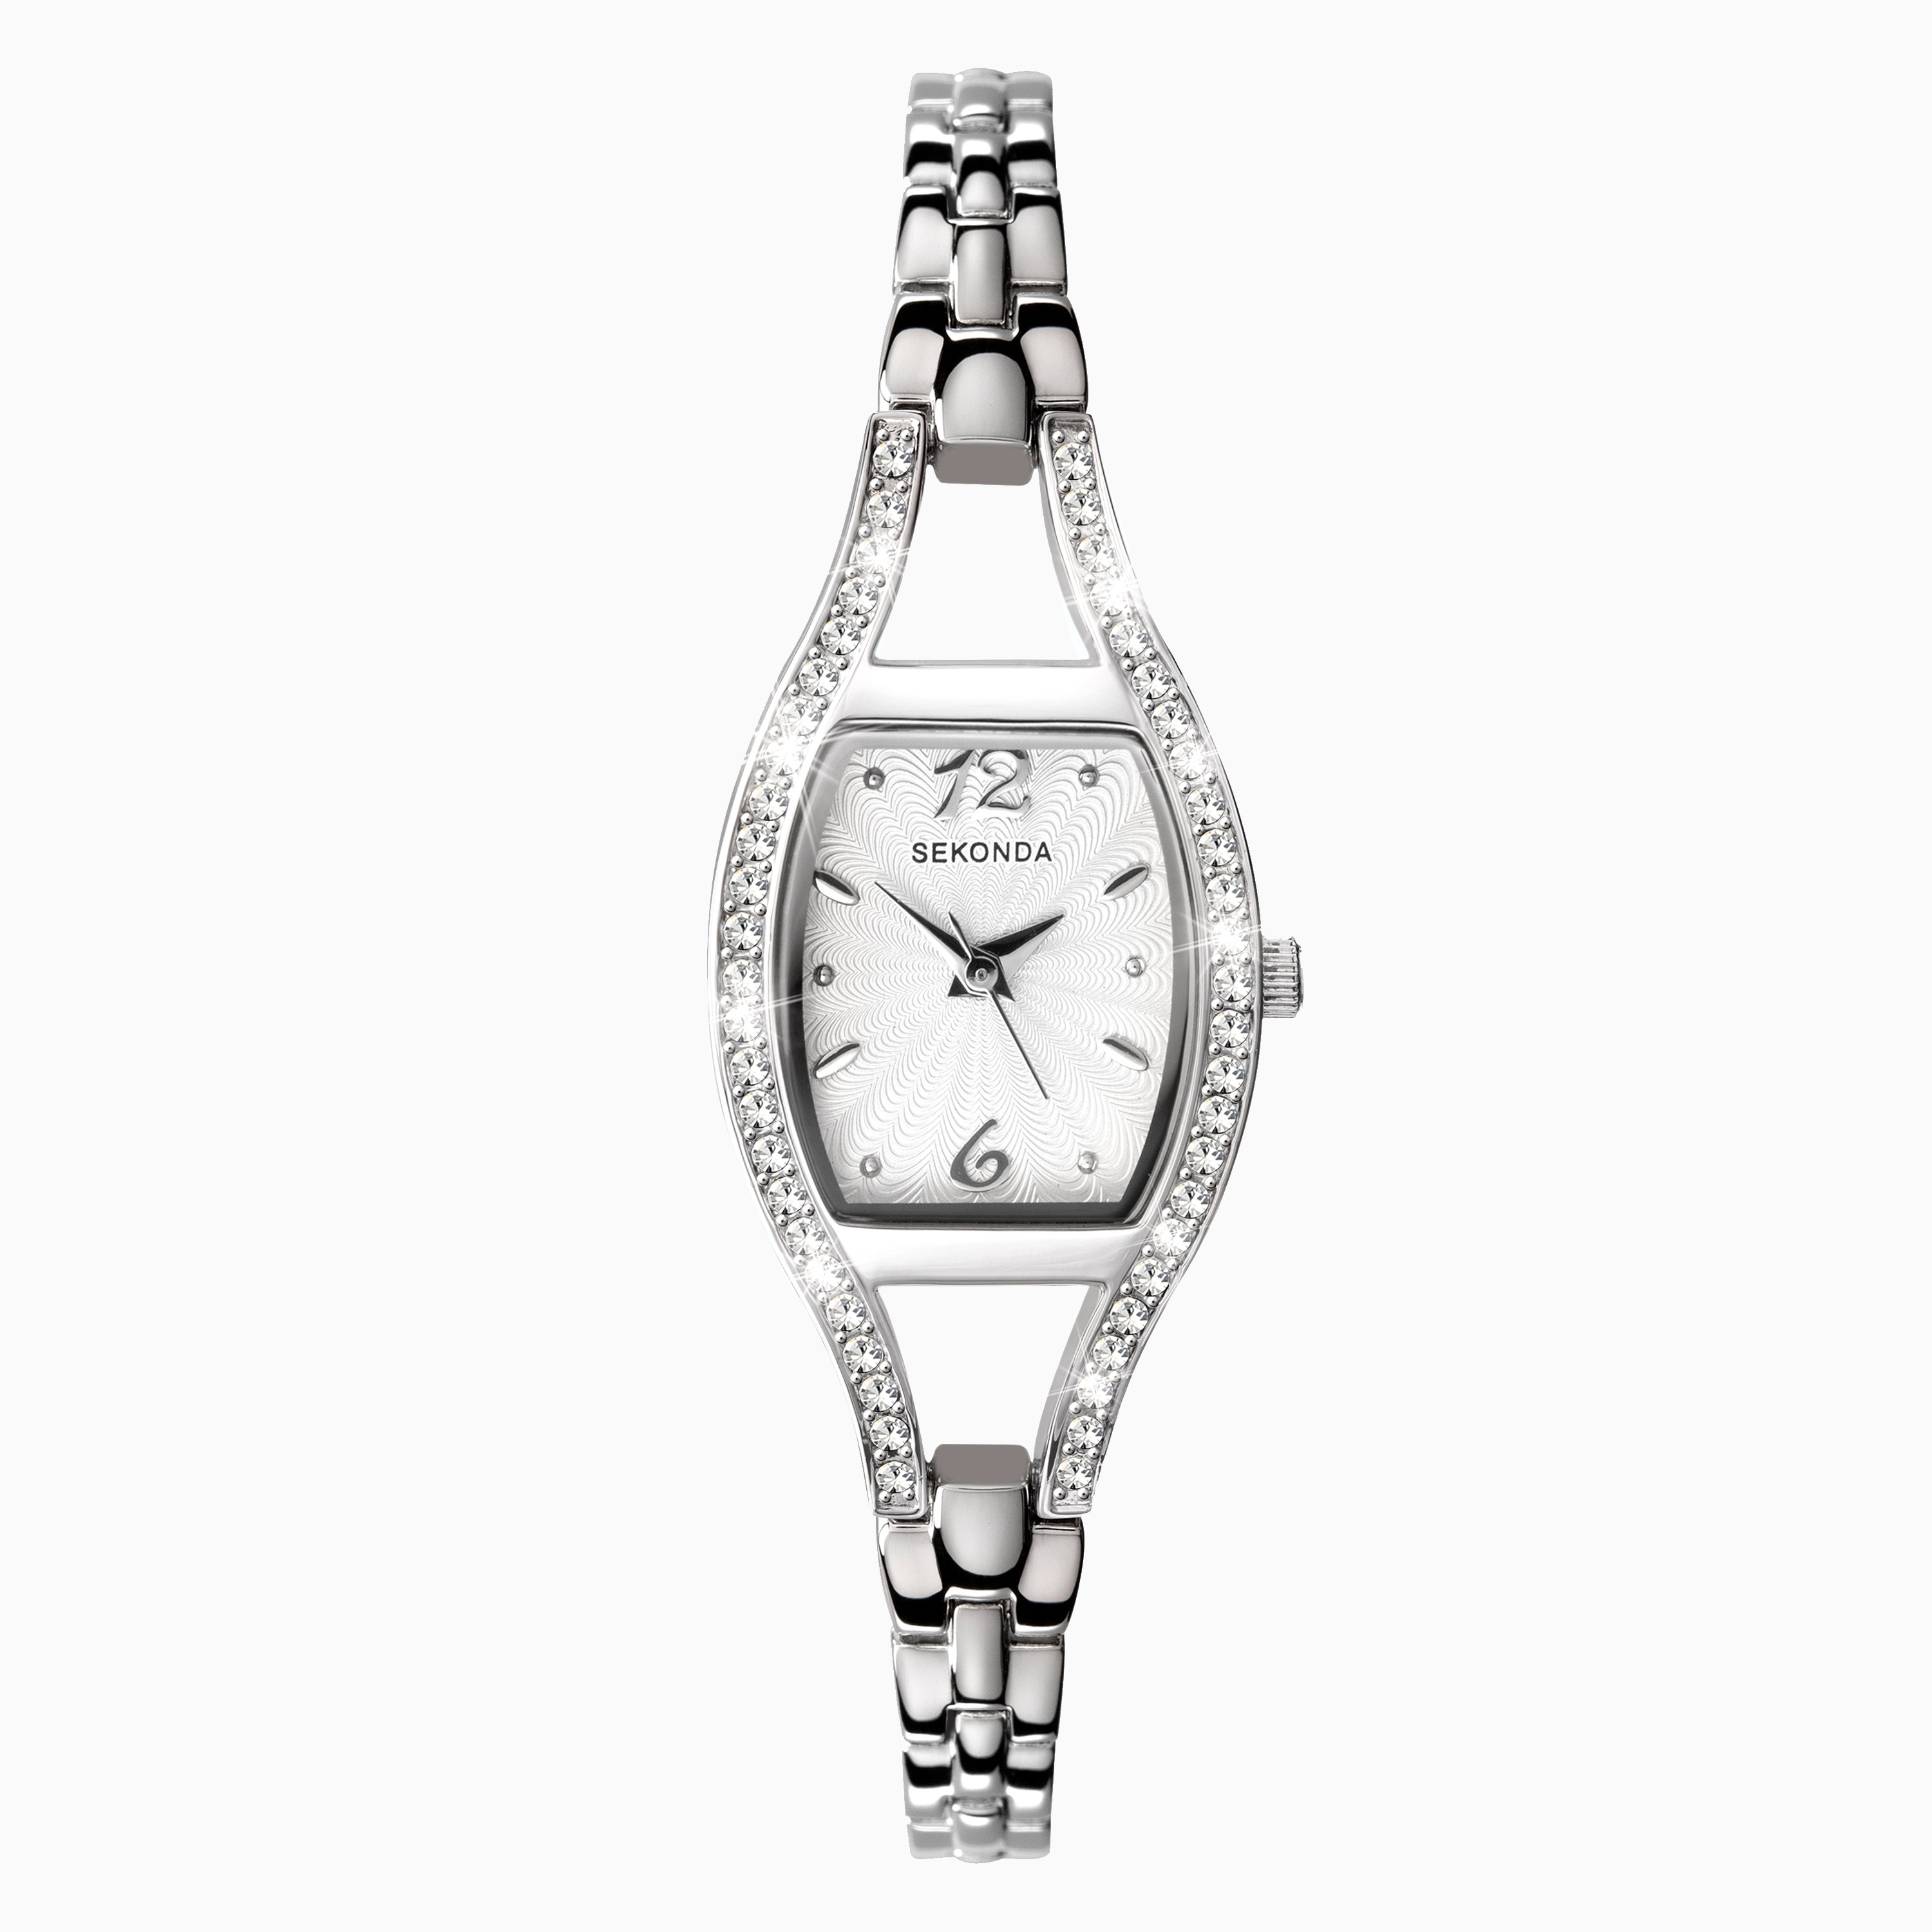 Sekonda Ladies Classic Watch 4474  Round  20mm  Gold Stainless Steel  Expanding Bracelet  White Dial  Sekonda